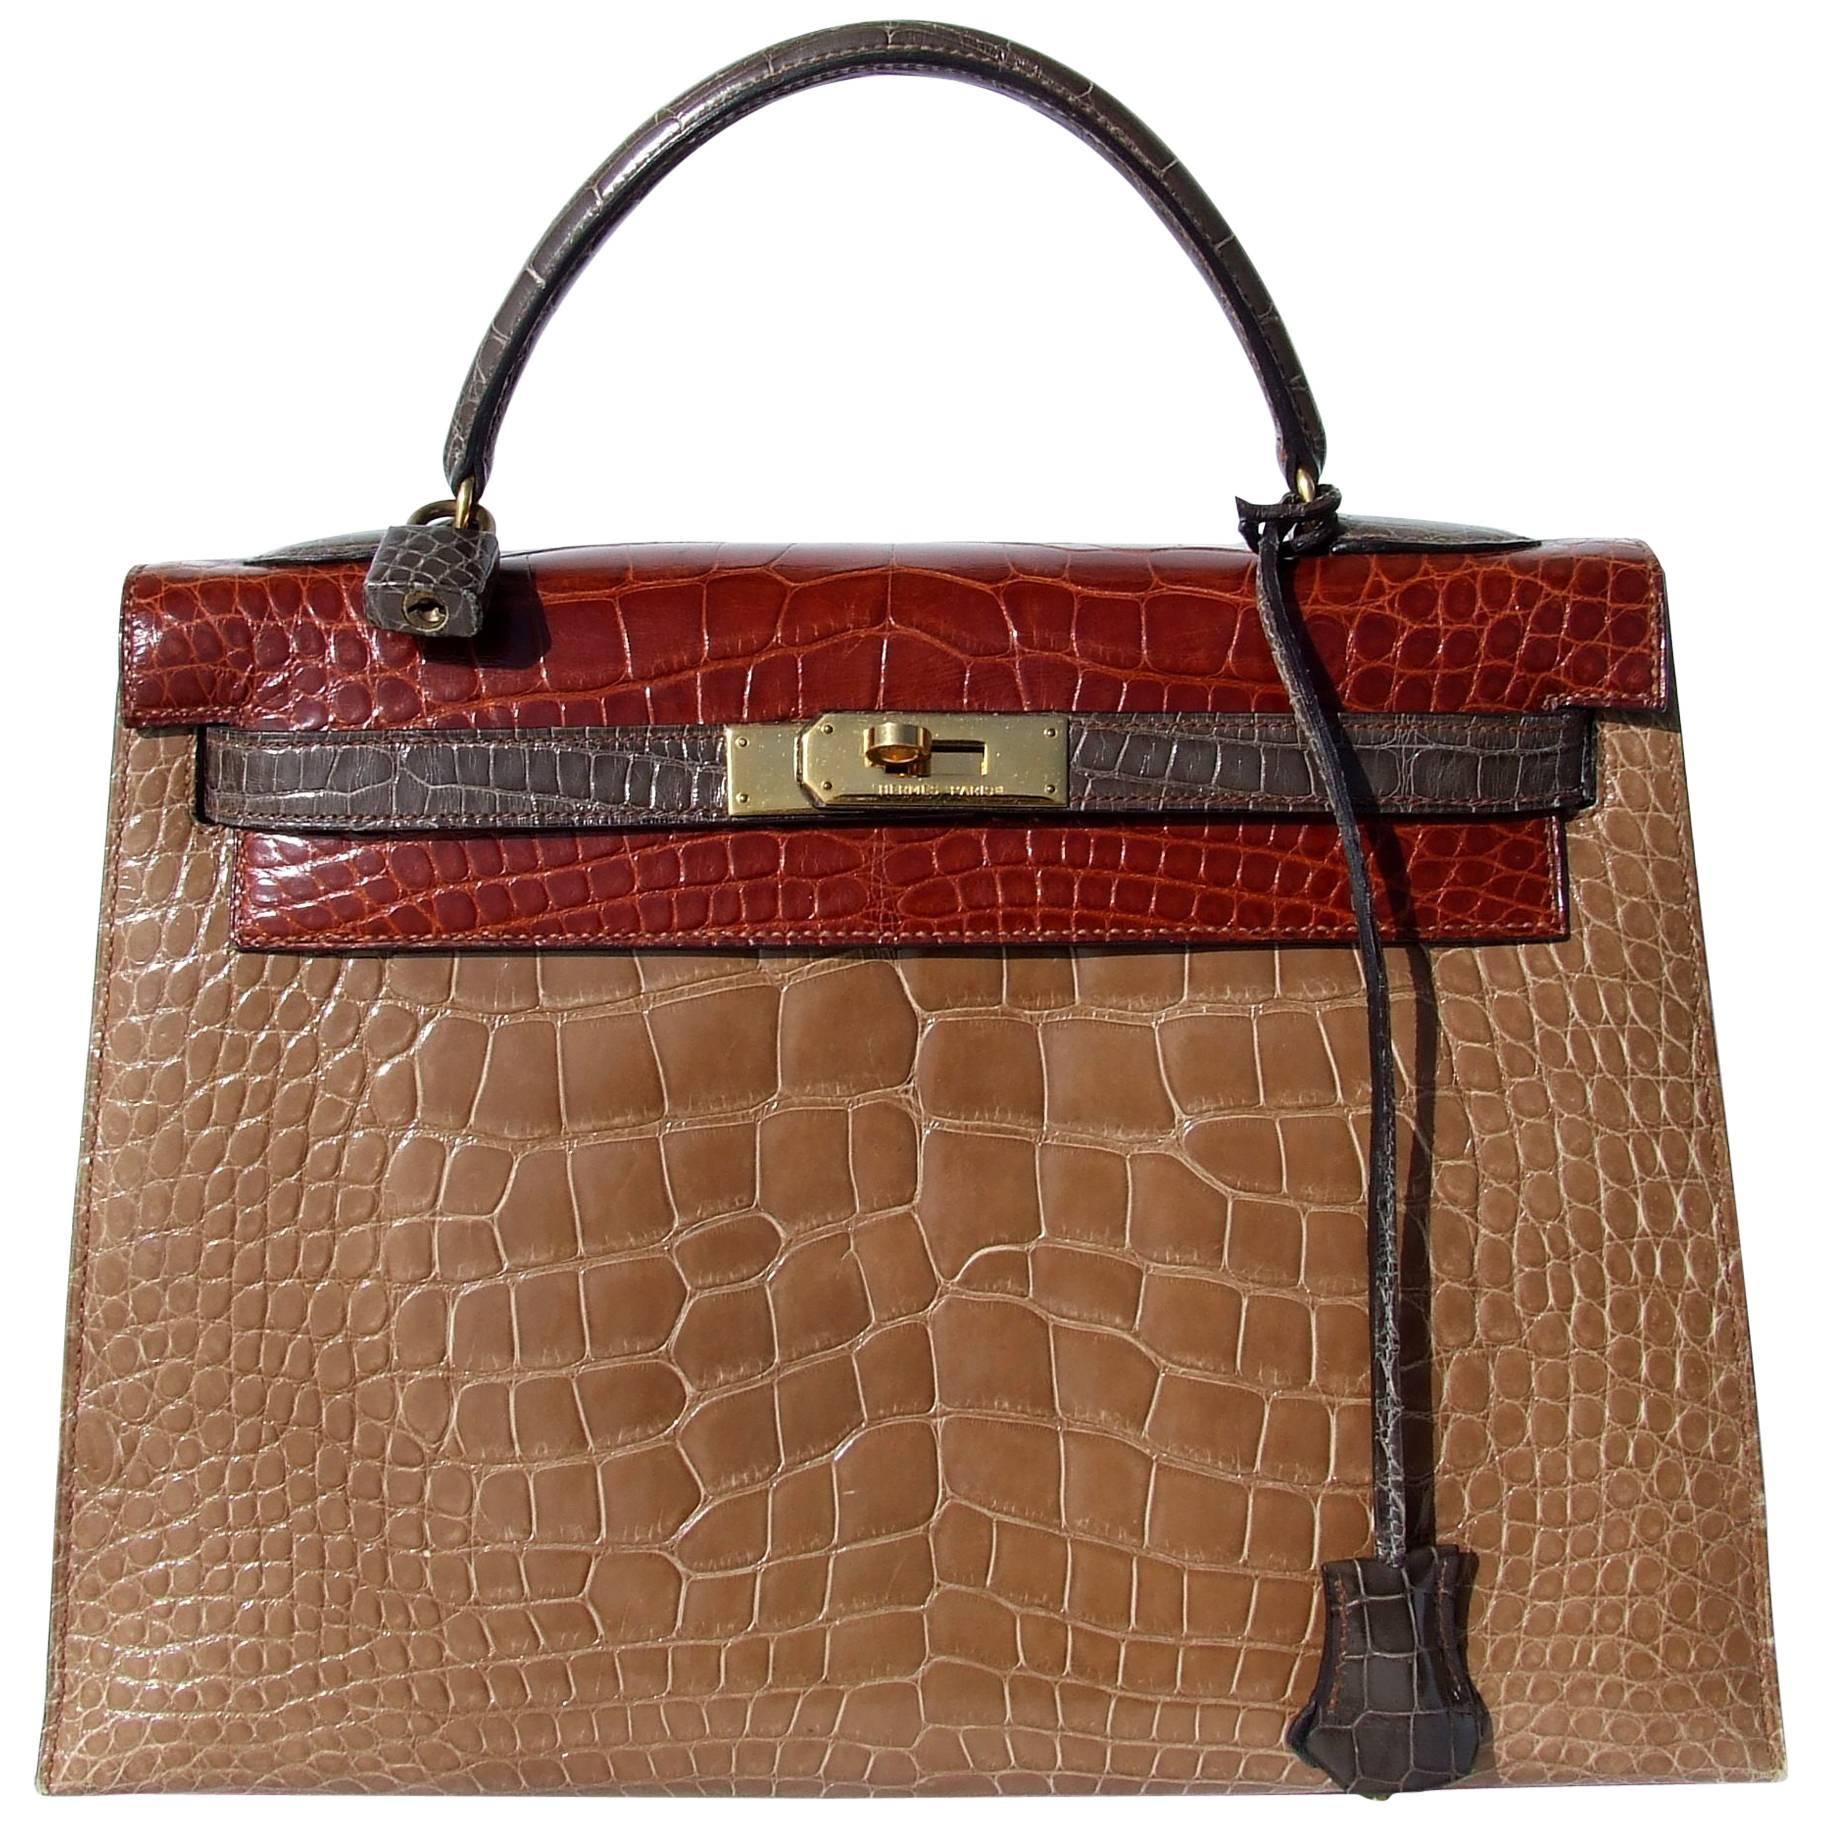 Exceptional Hermès Kelly Bag Tricolor Alligator Ghw 32 cm RARE Exc Cond